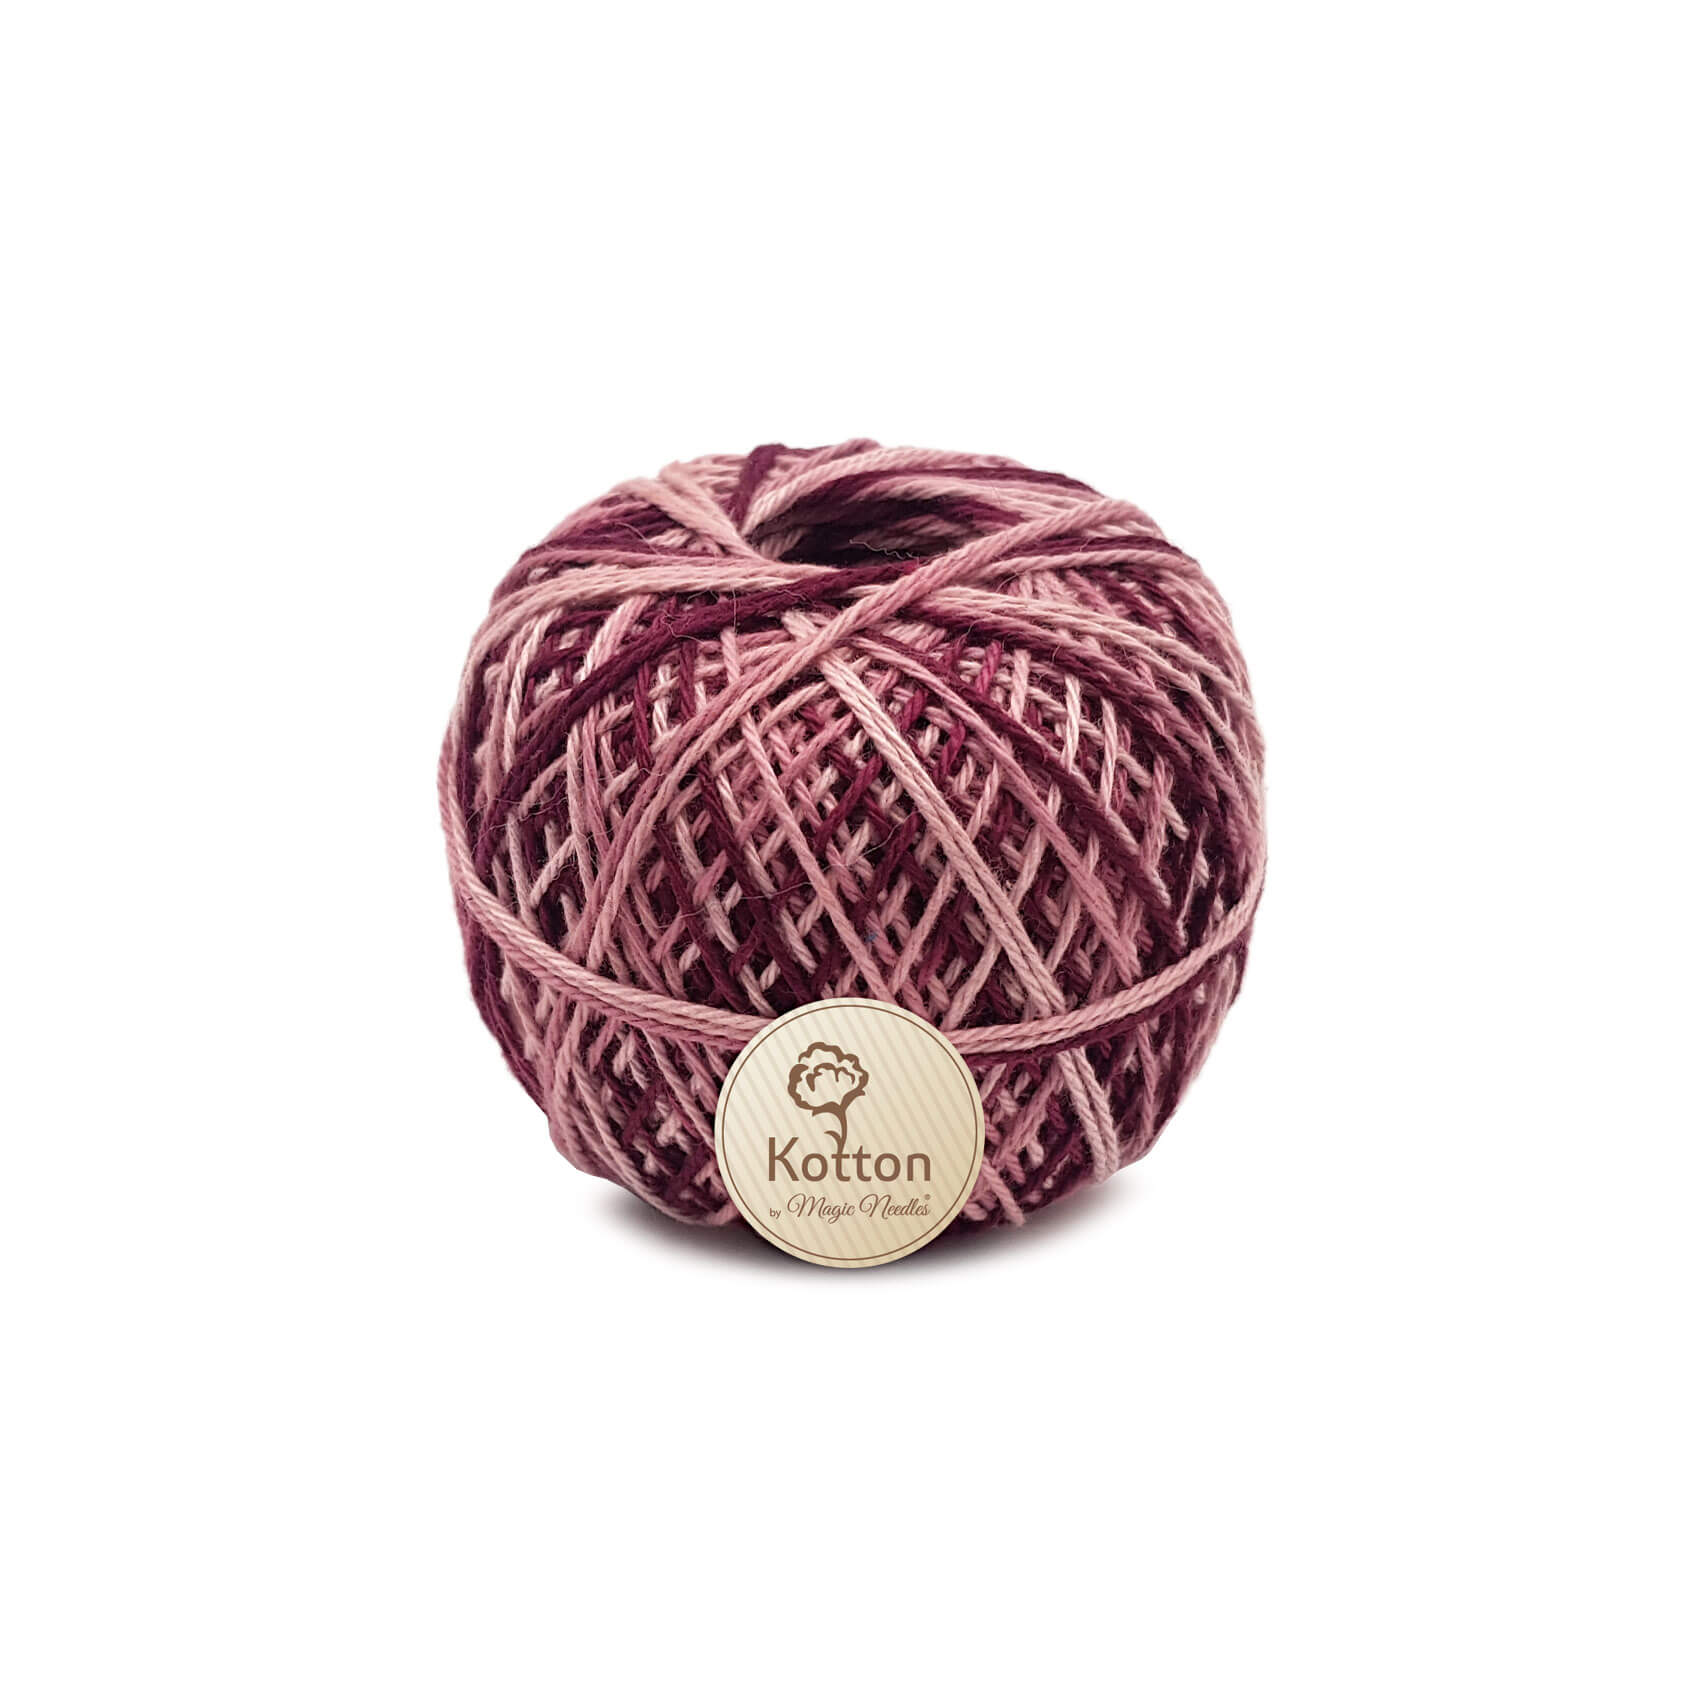 Kotton 3 ply Mercerised Cotton Yarn - Multi Color 13